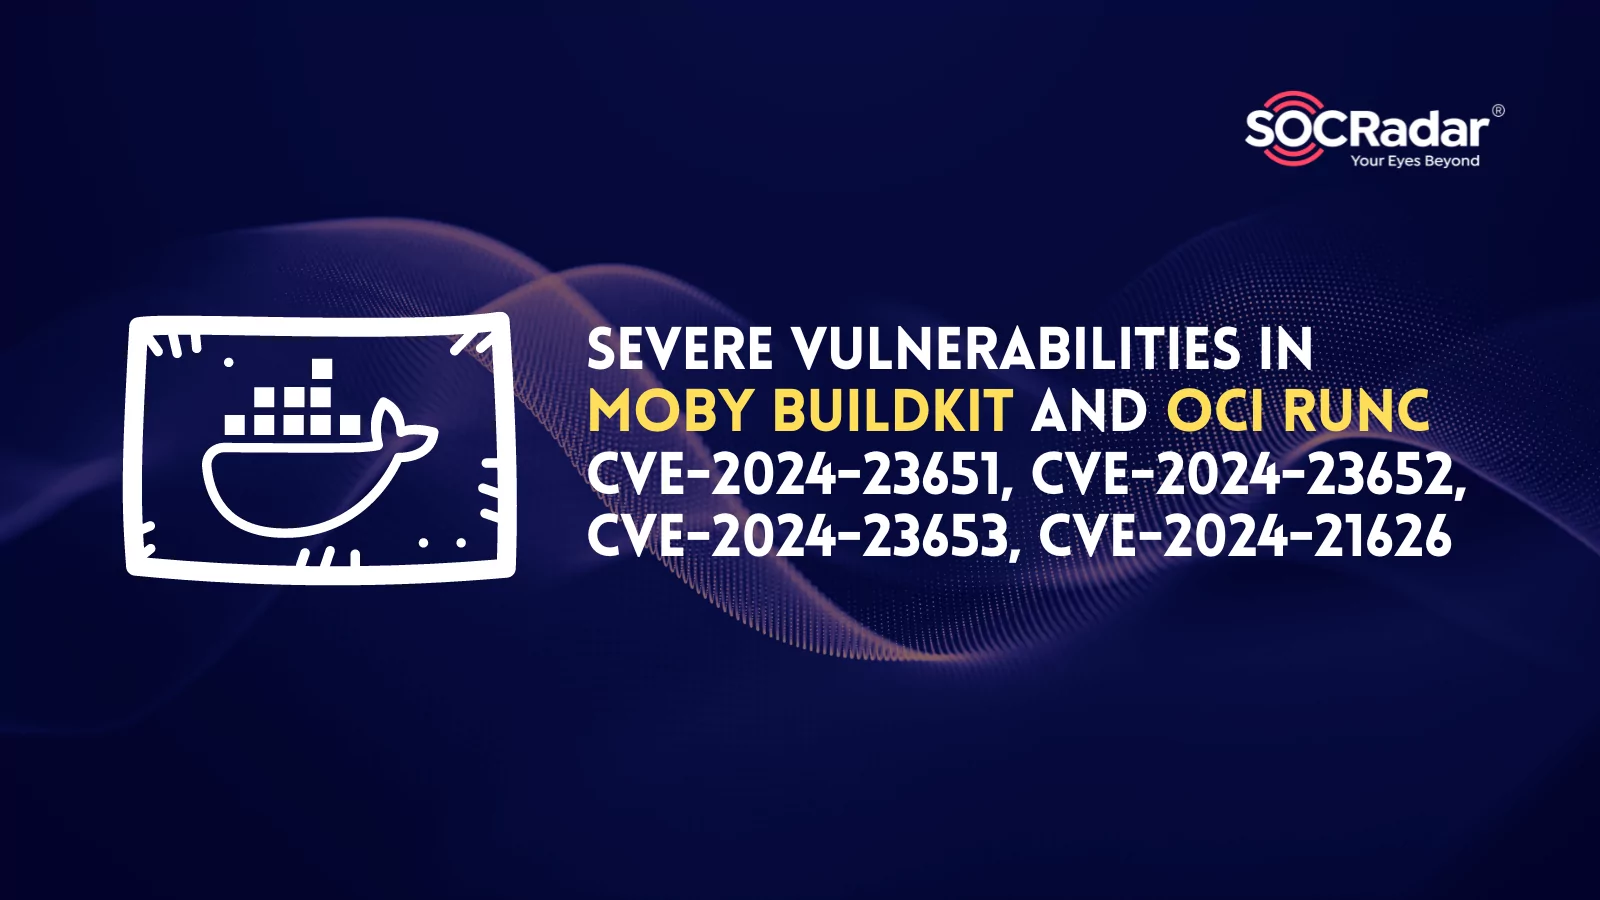 SOCRadar® Cyber Intelligence Inc. | Severe Vulnerabilities in Moby BuildKit and OCI runc: CVE-2024-23651, CVE-2024-23652, CVE-2024-23653, CVE-2024-21626